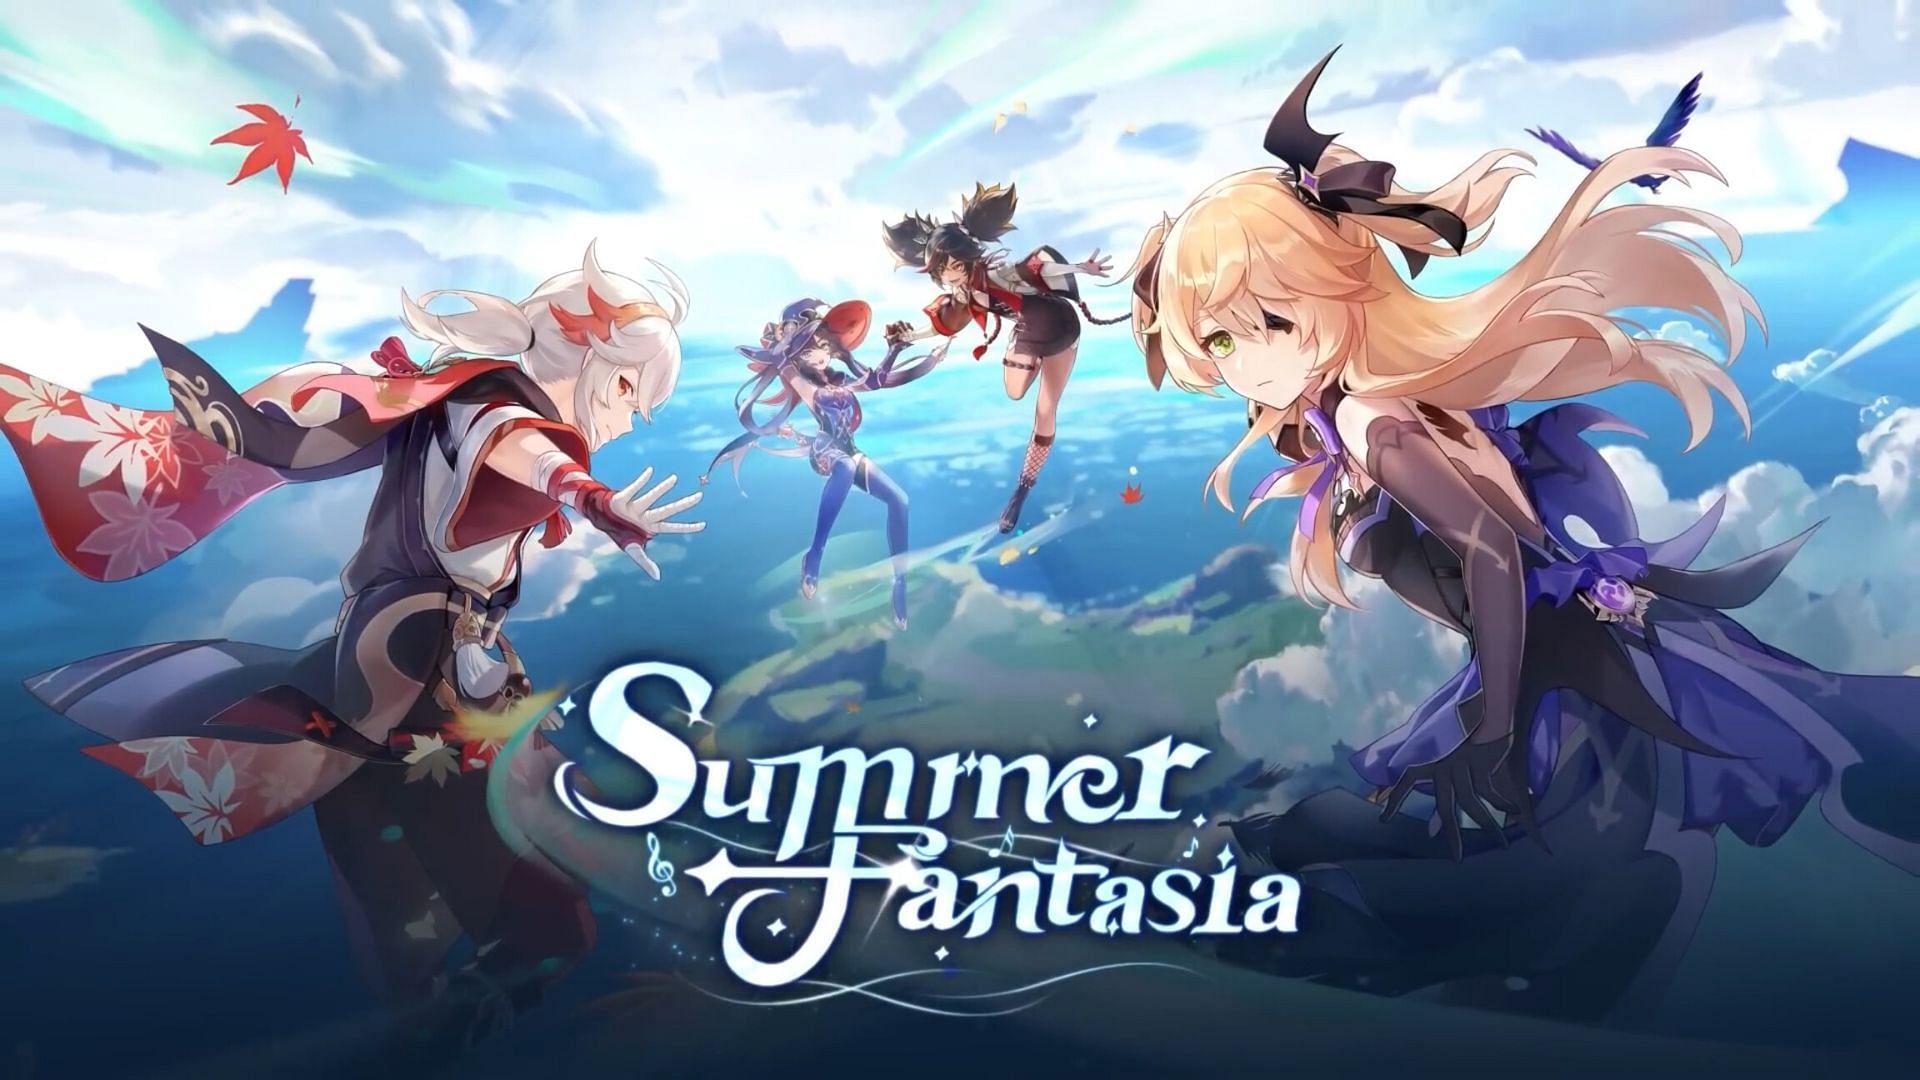 Genshin Impact "Summer Fantasia" update banners, island and free skins